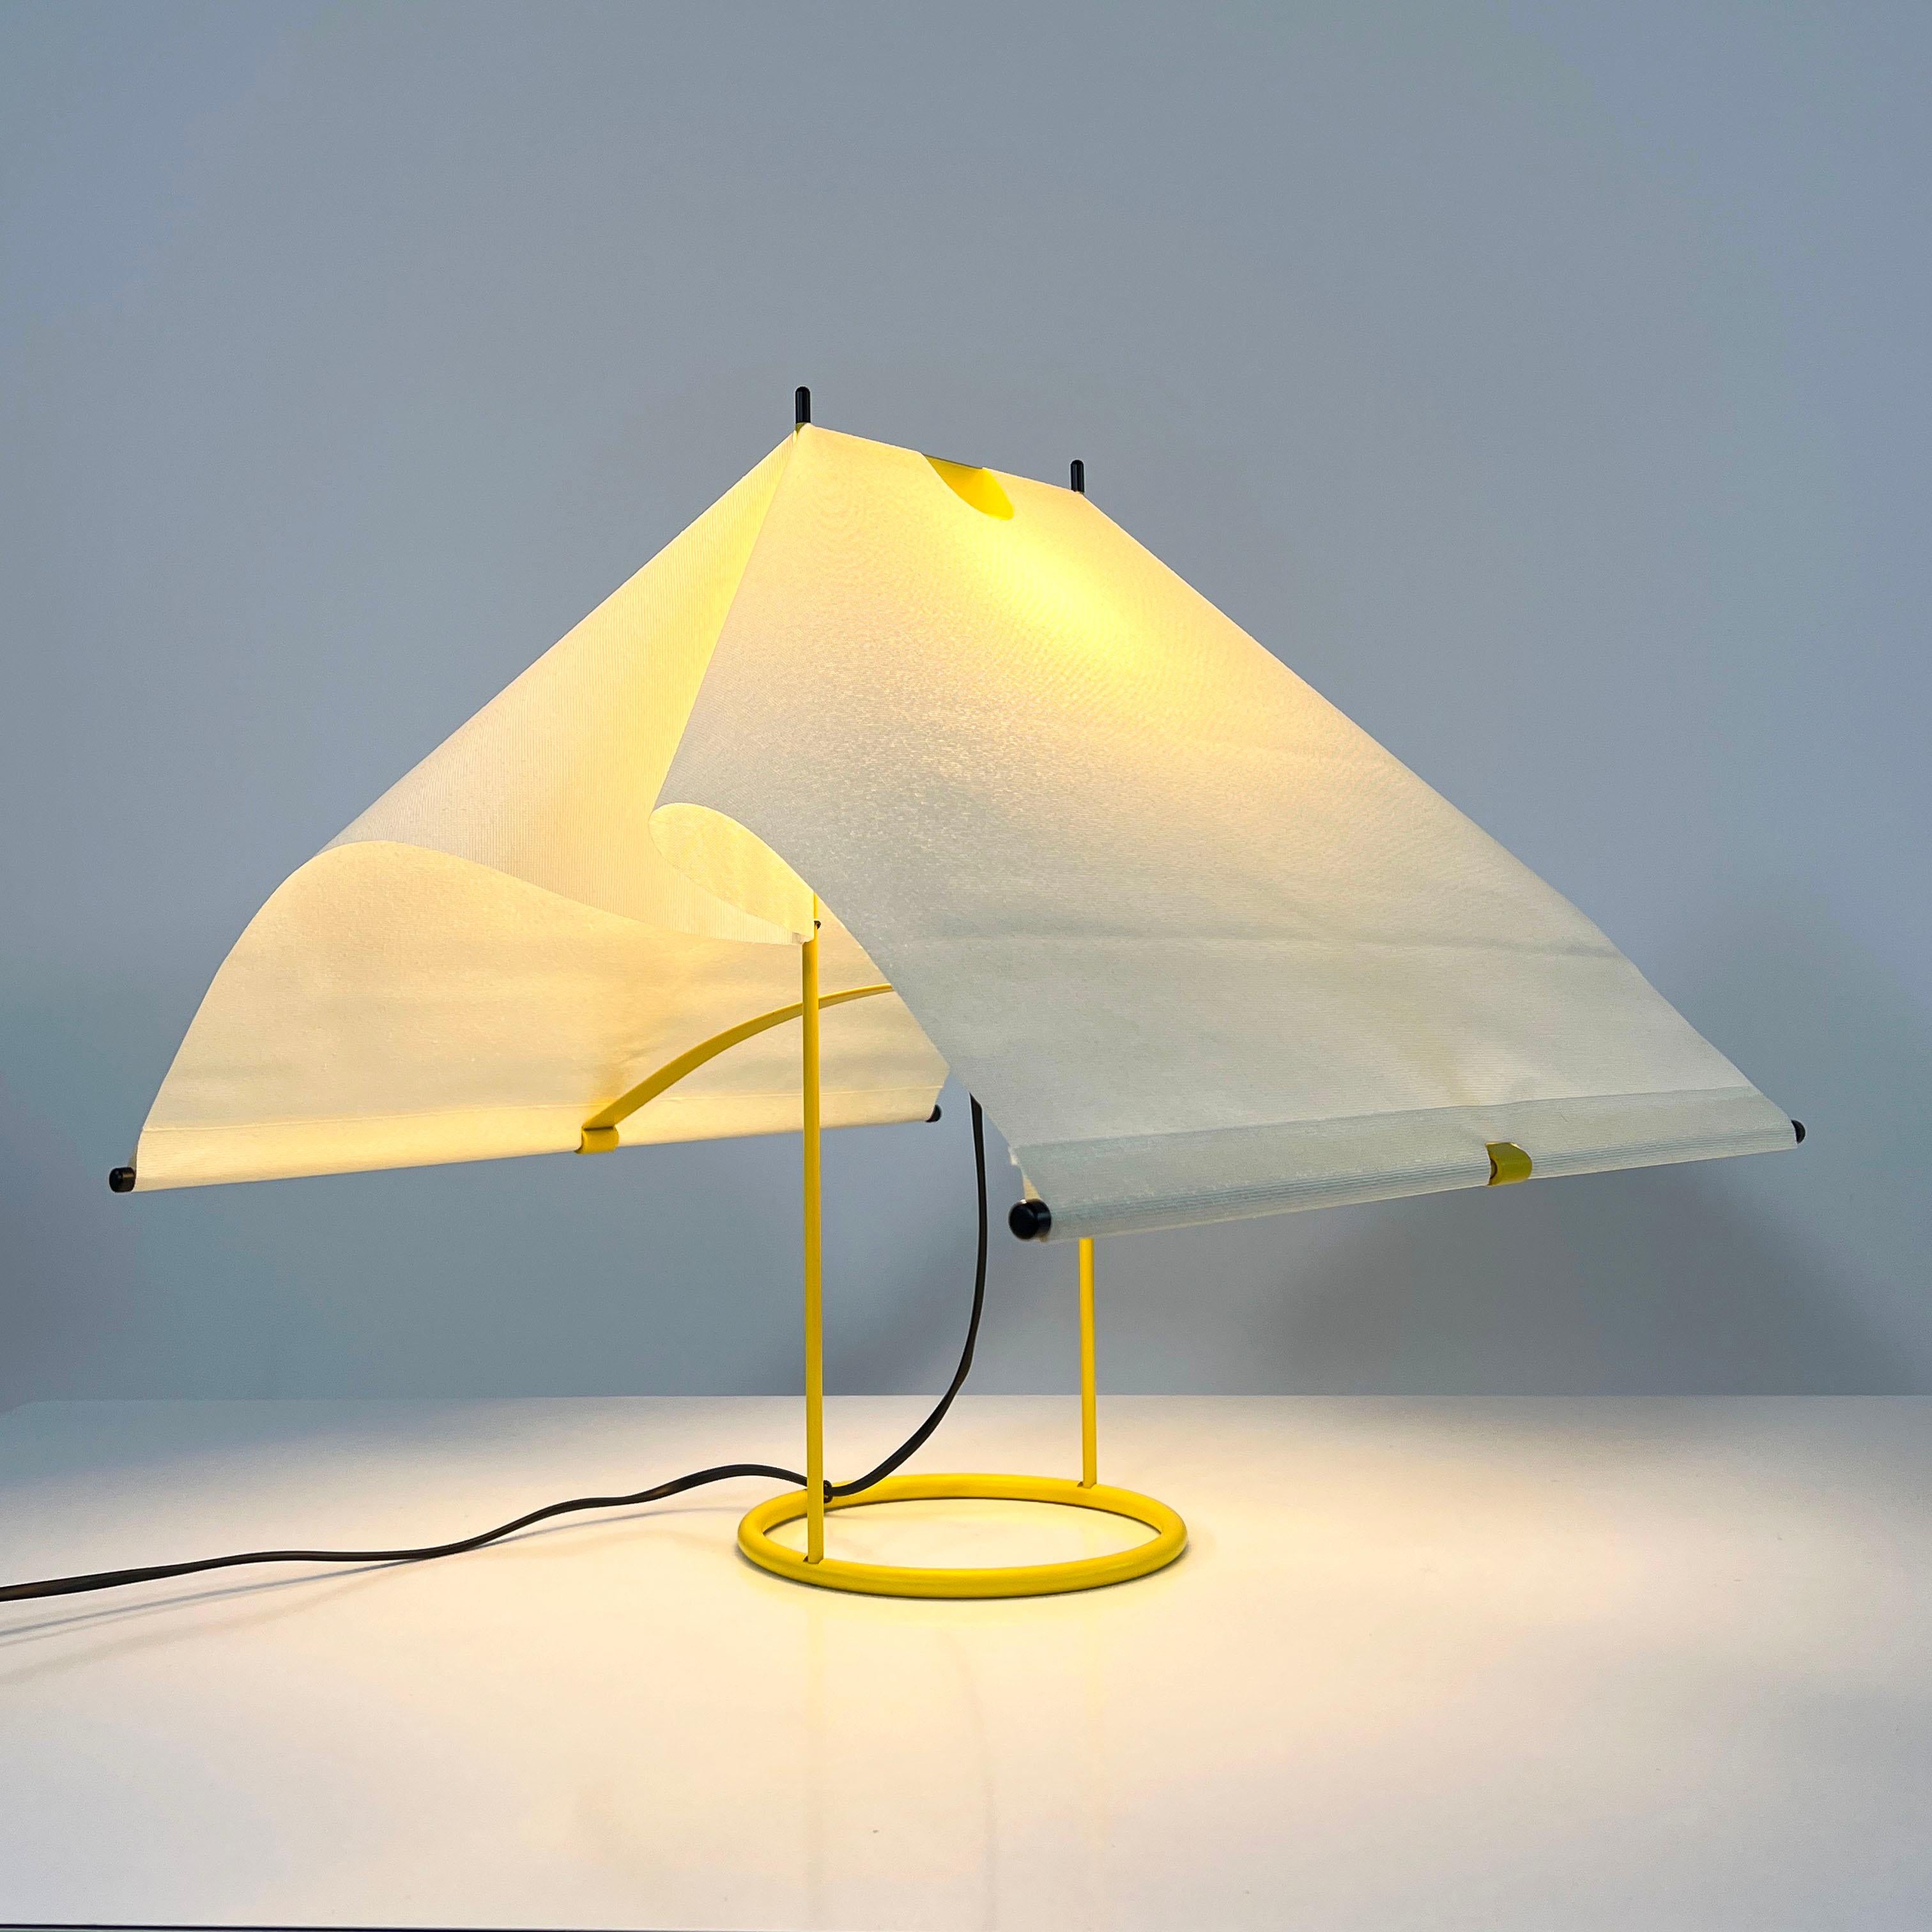 Designer - Piero De Martini 
Producer - Arteluce
Model - Le Falene Table Lamp 
Design Period - Eighties
Measurements - Width 49 cm x Depth 49 cm x Height 46 cm
Materials - Lacquered Steel, Taut Fabric Shade
Color - Yellow, White 

Condition